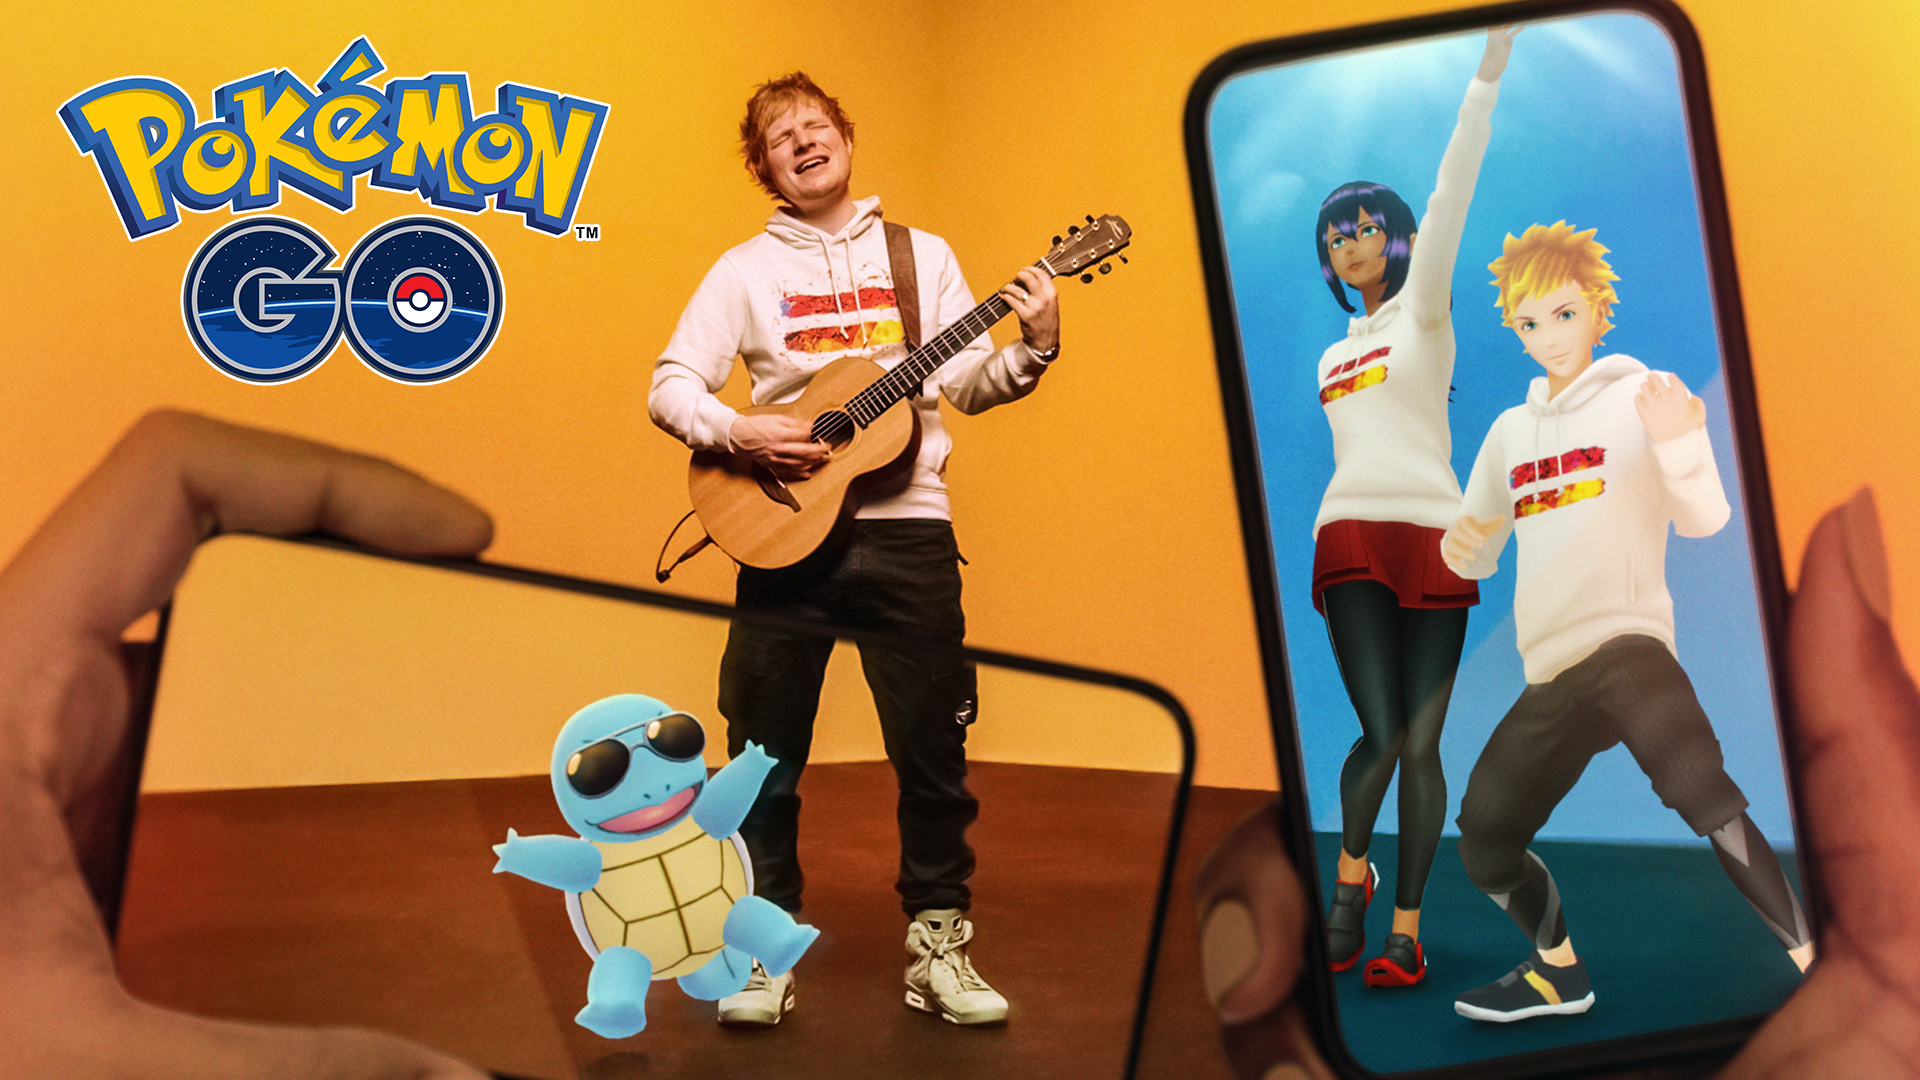 Ed Sheeran coming to Pokémon Go